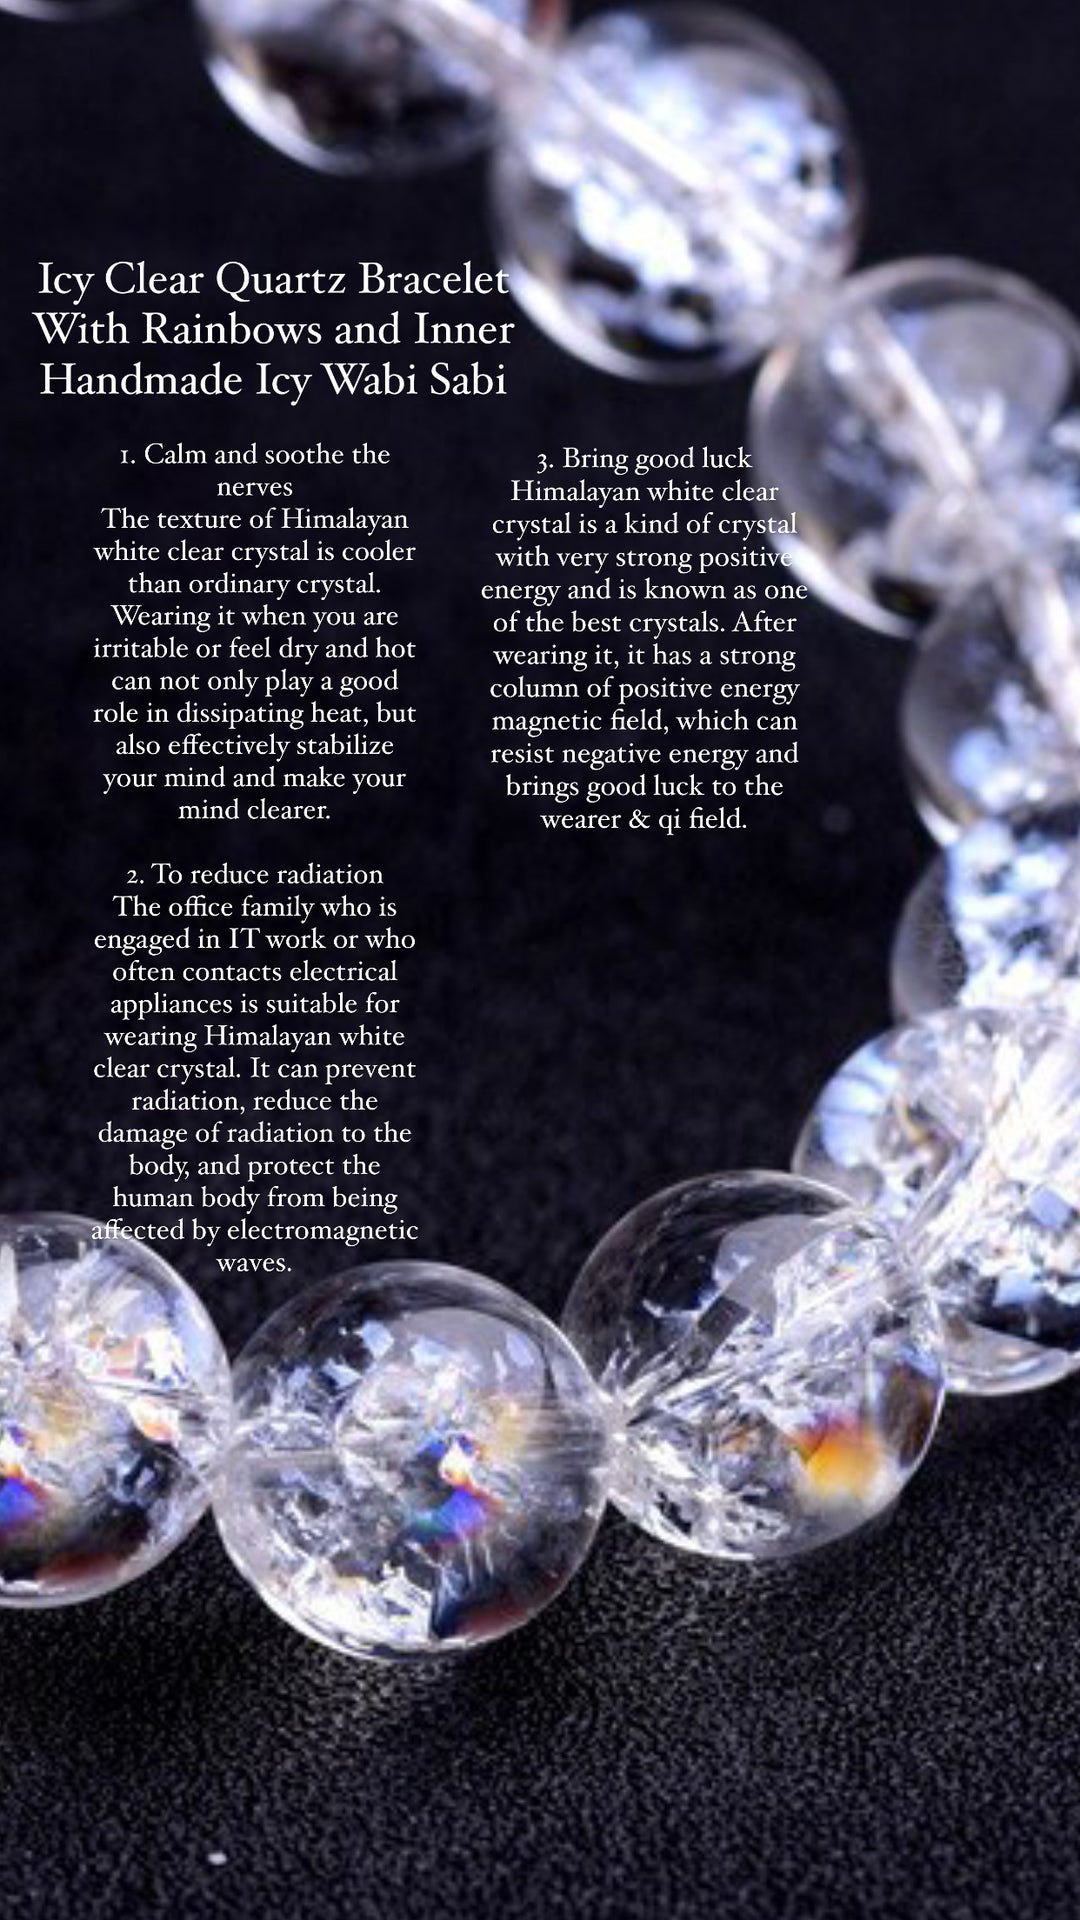 Icy Clear Quartz Bracelet • With Rainbows and Inner, Handmade Icy Wabi Sabi